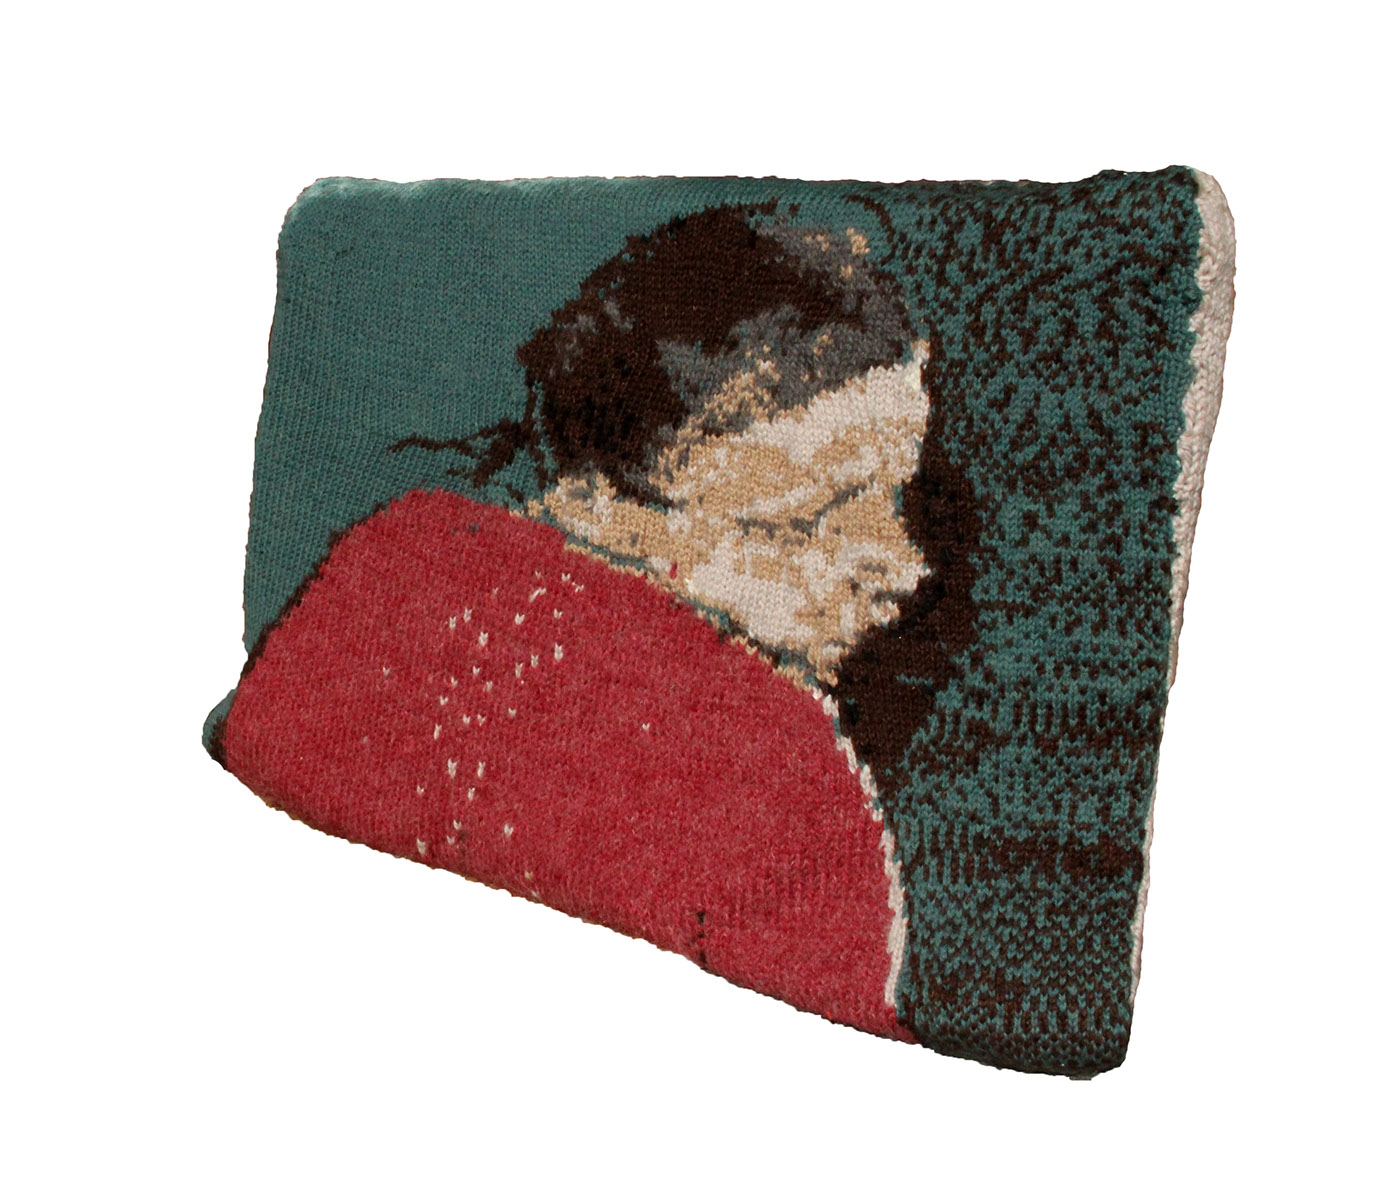 knitting hand knitting risd risd textiles poland